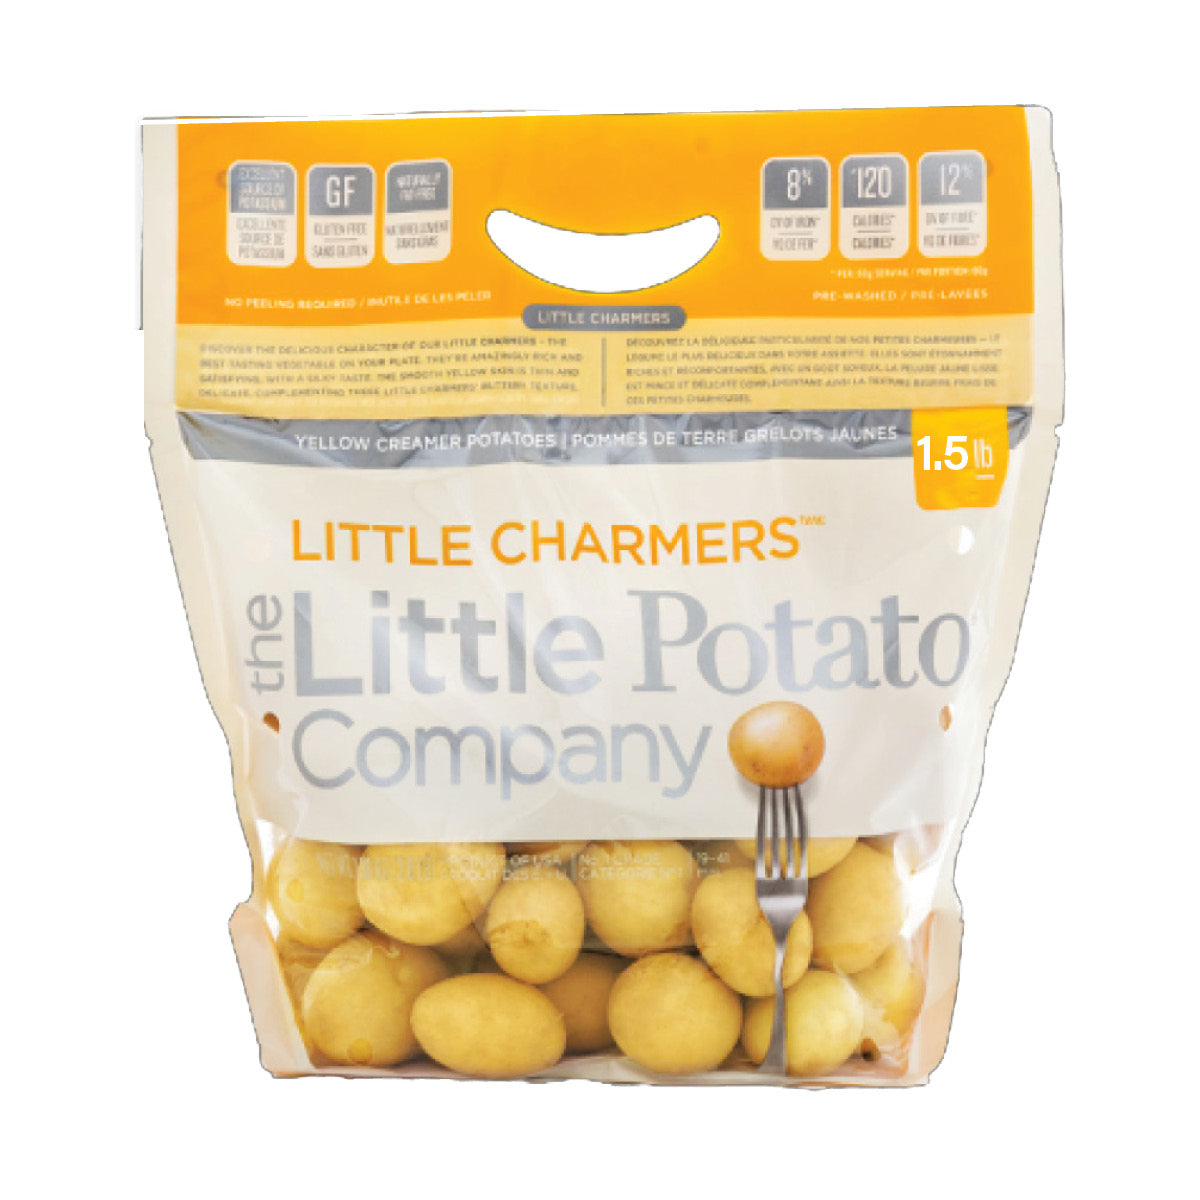 Little Potato Company Yellow Potatoes - 1.5 lb bag